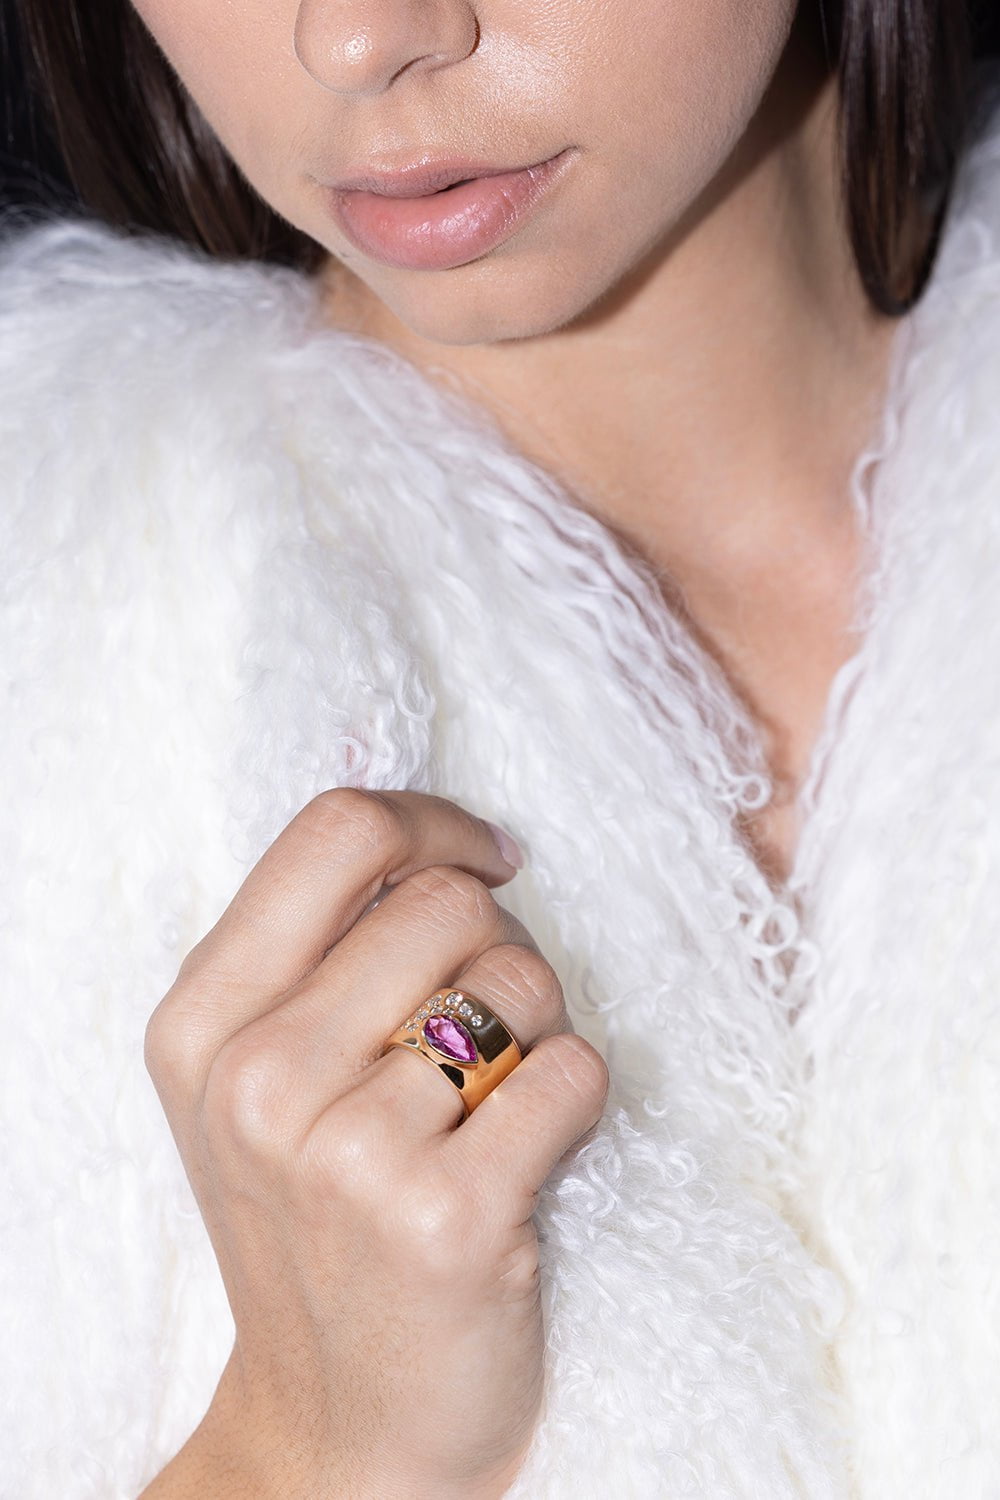 UNIFORM OBJECT-Pink Sapphire Cuff Ring-YELLOW GOLD